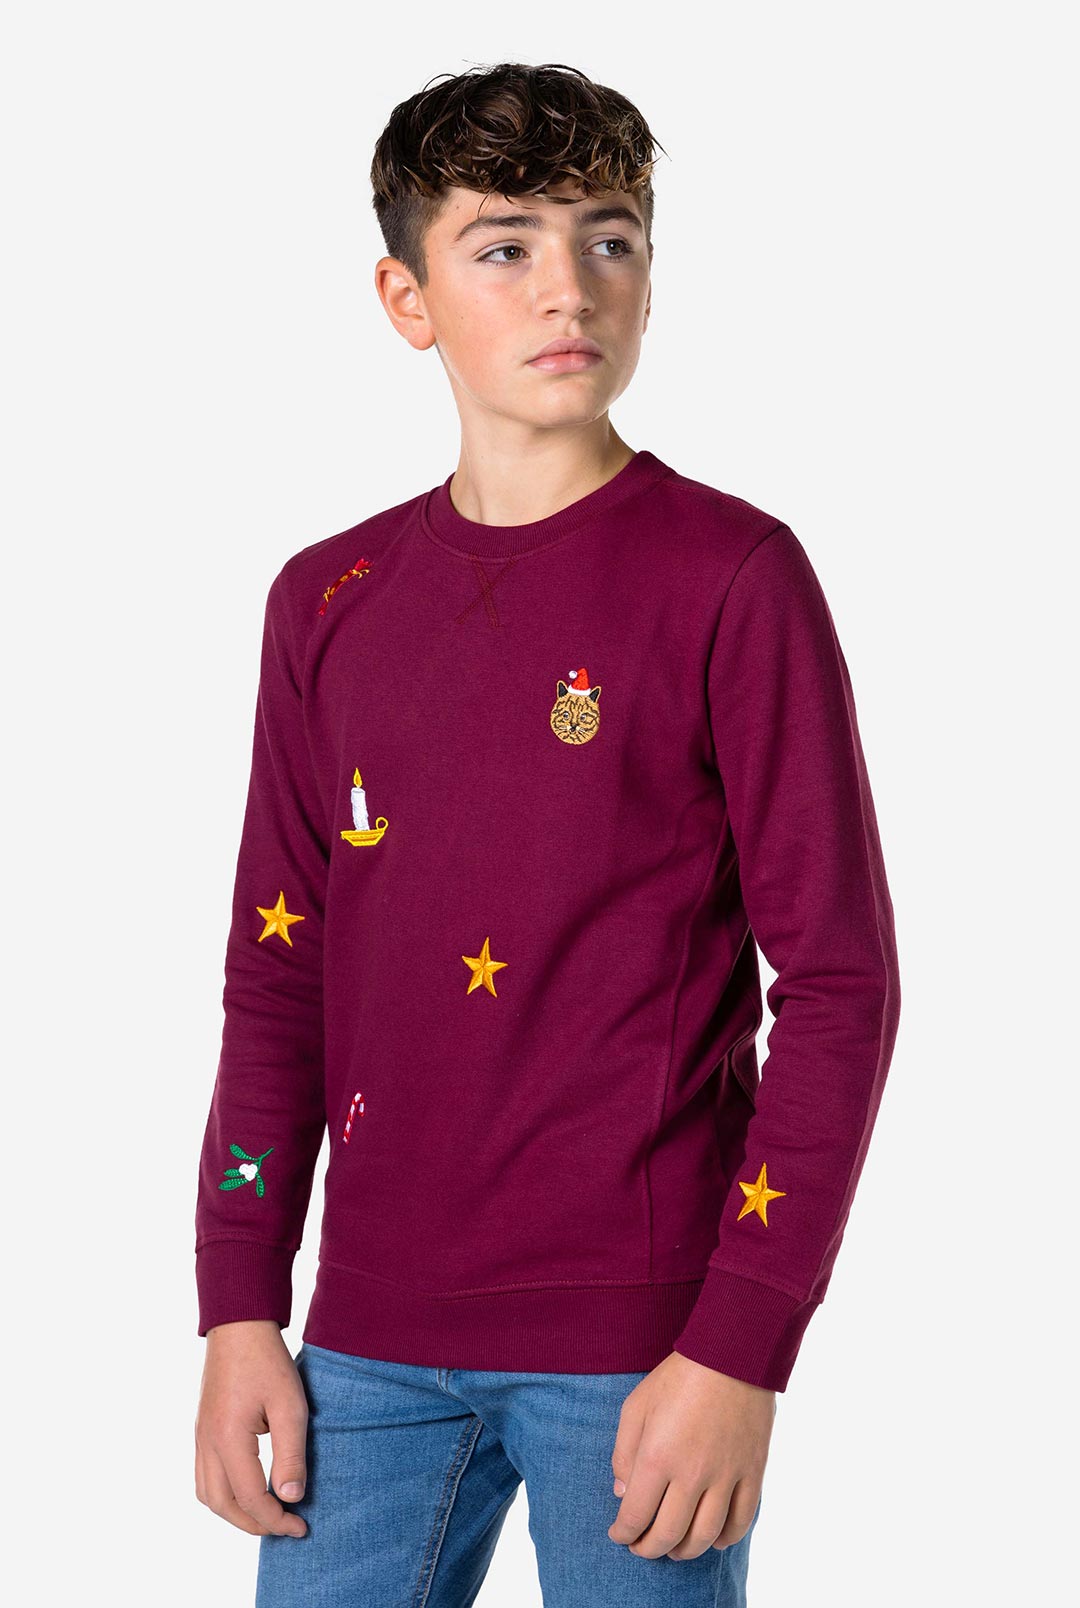 X-mas Icons Burgundy Sweater Teen Boys | Red Christmas Sweater Teens ...